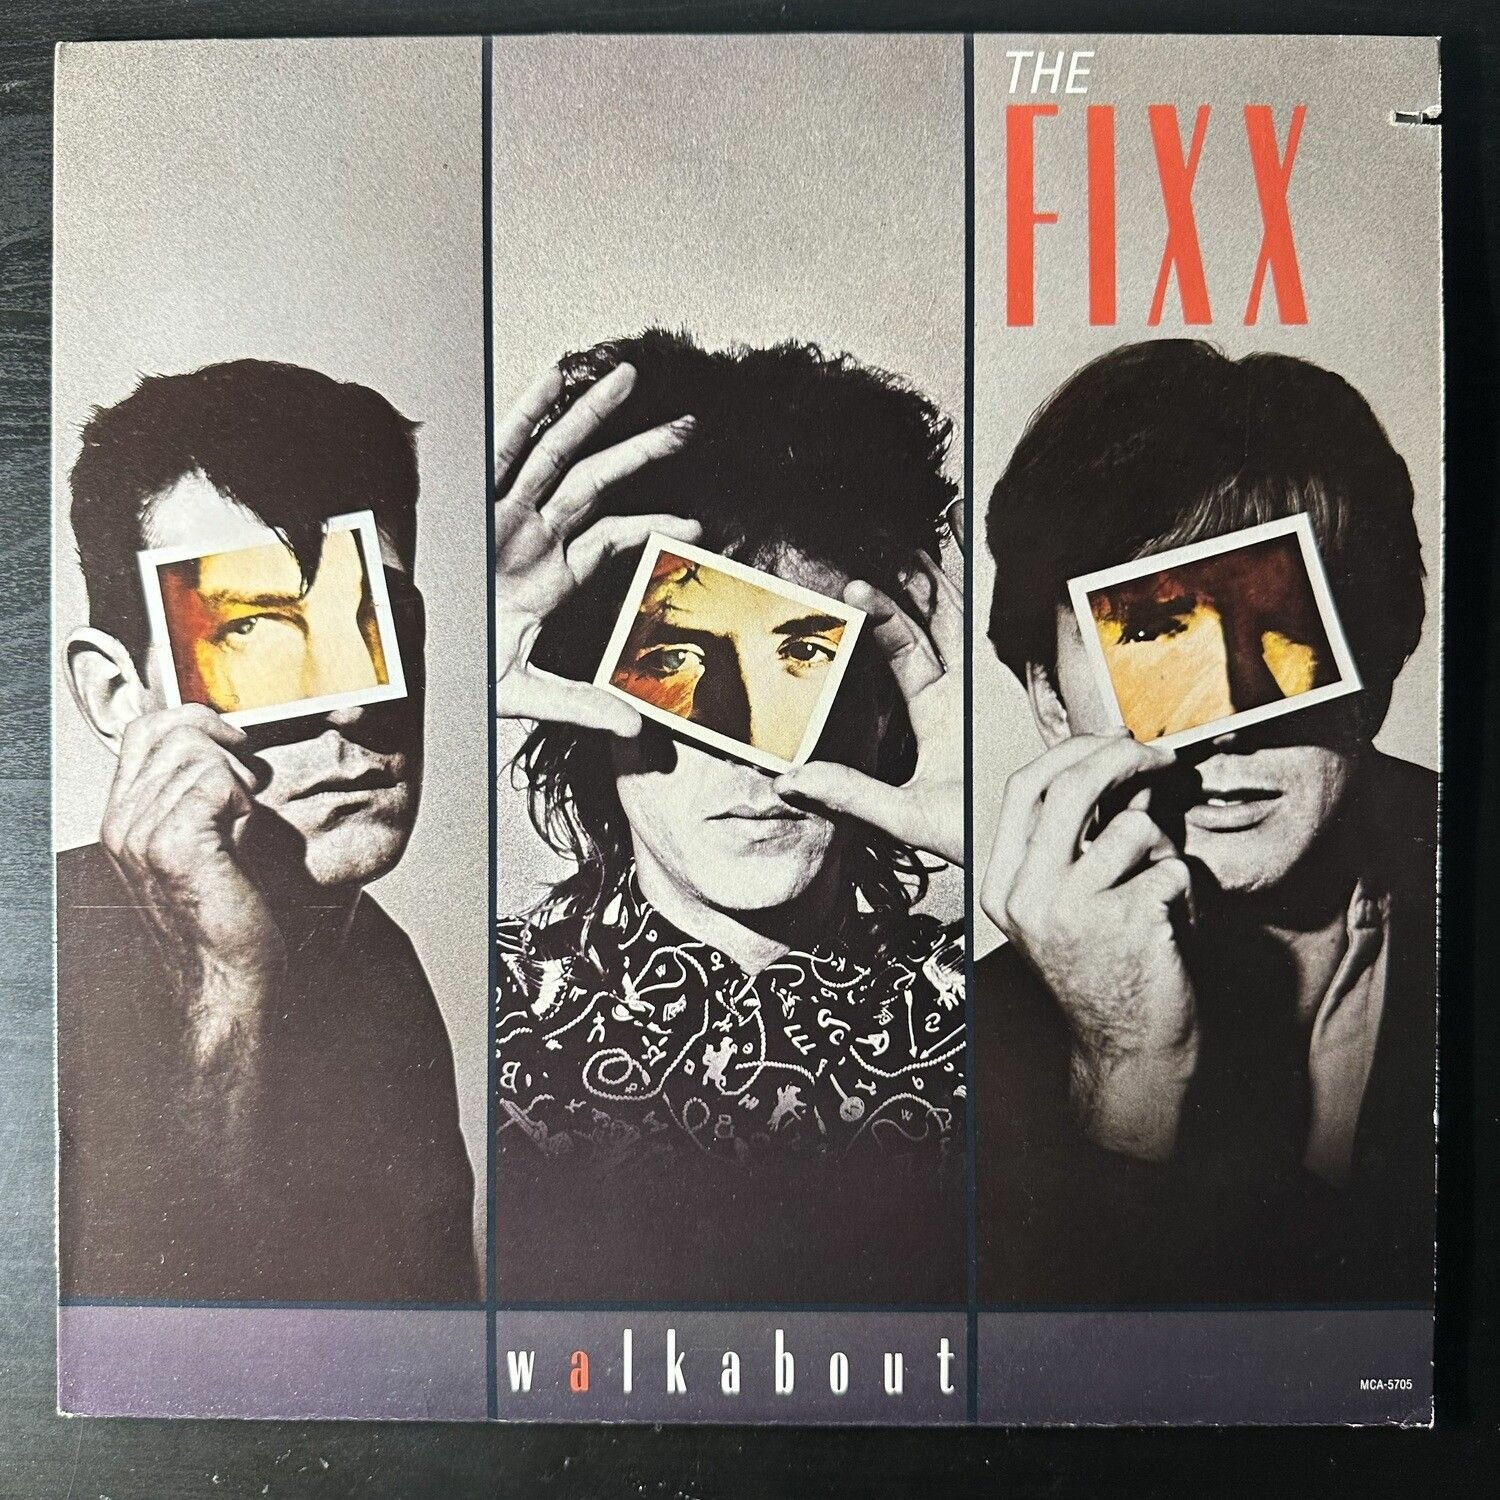 Виниловая пластинка The Fixx Walkabout (Канада 1986г.)